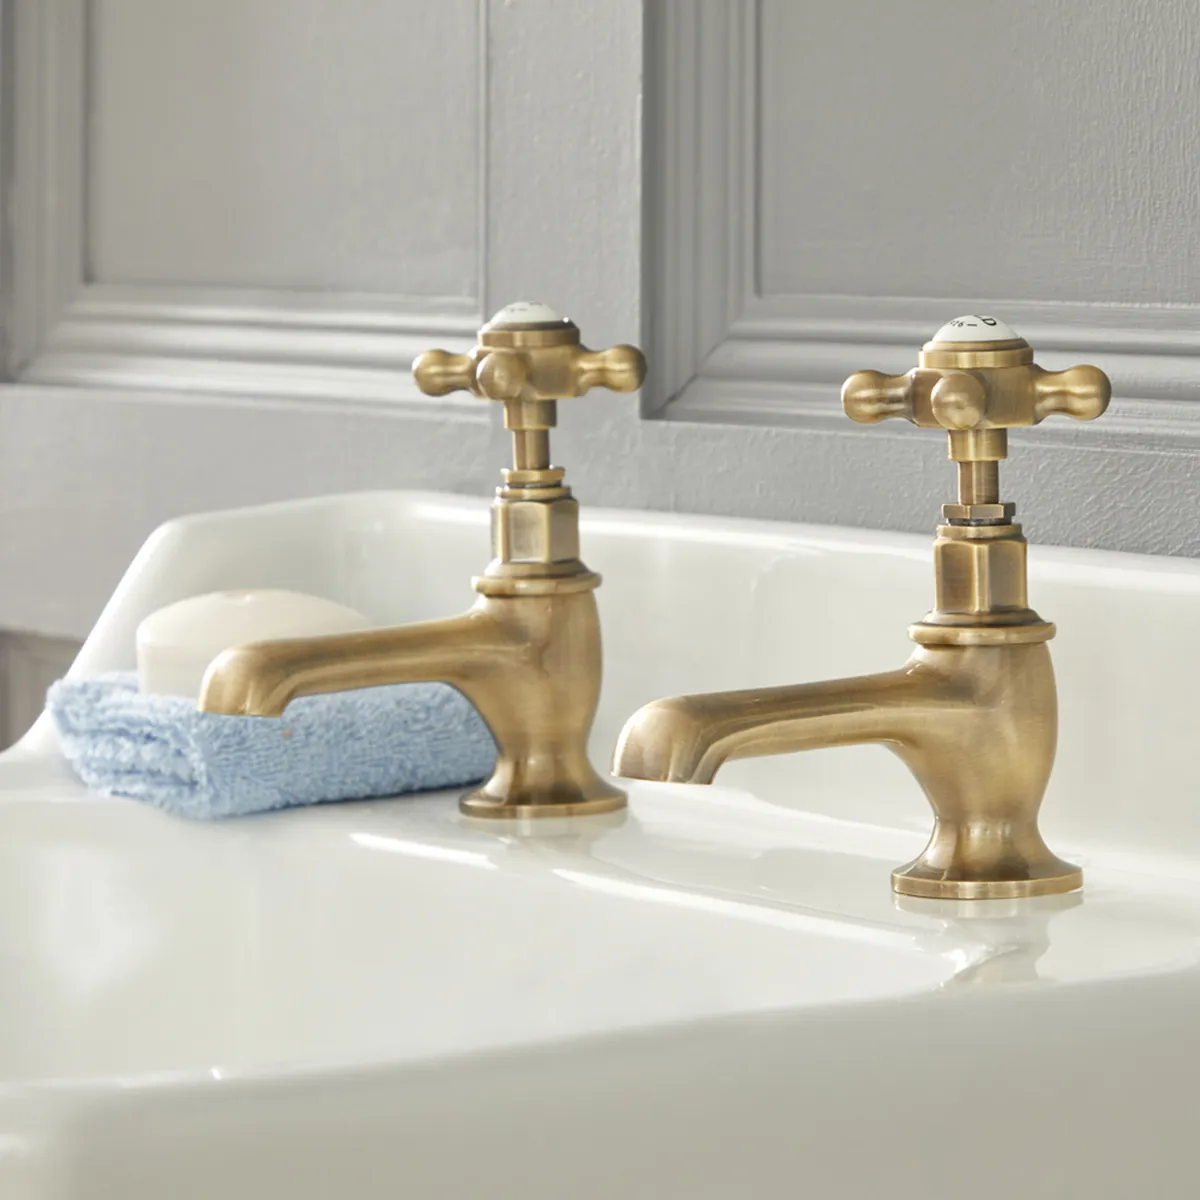 Milano Elizabeth traditional crosshead basin pillar taps in Brushed Gold, £79.99, Big Bathroom Shop